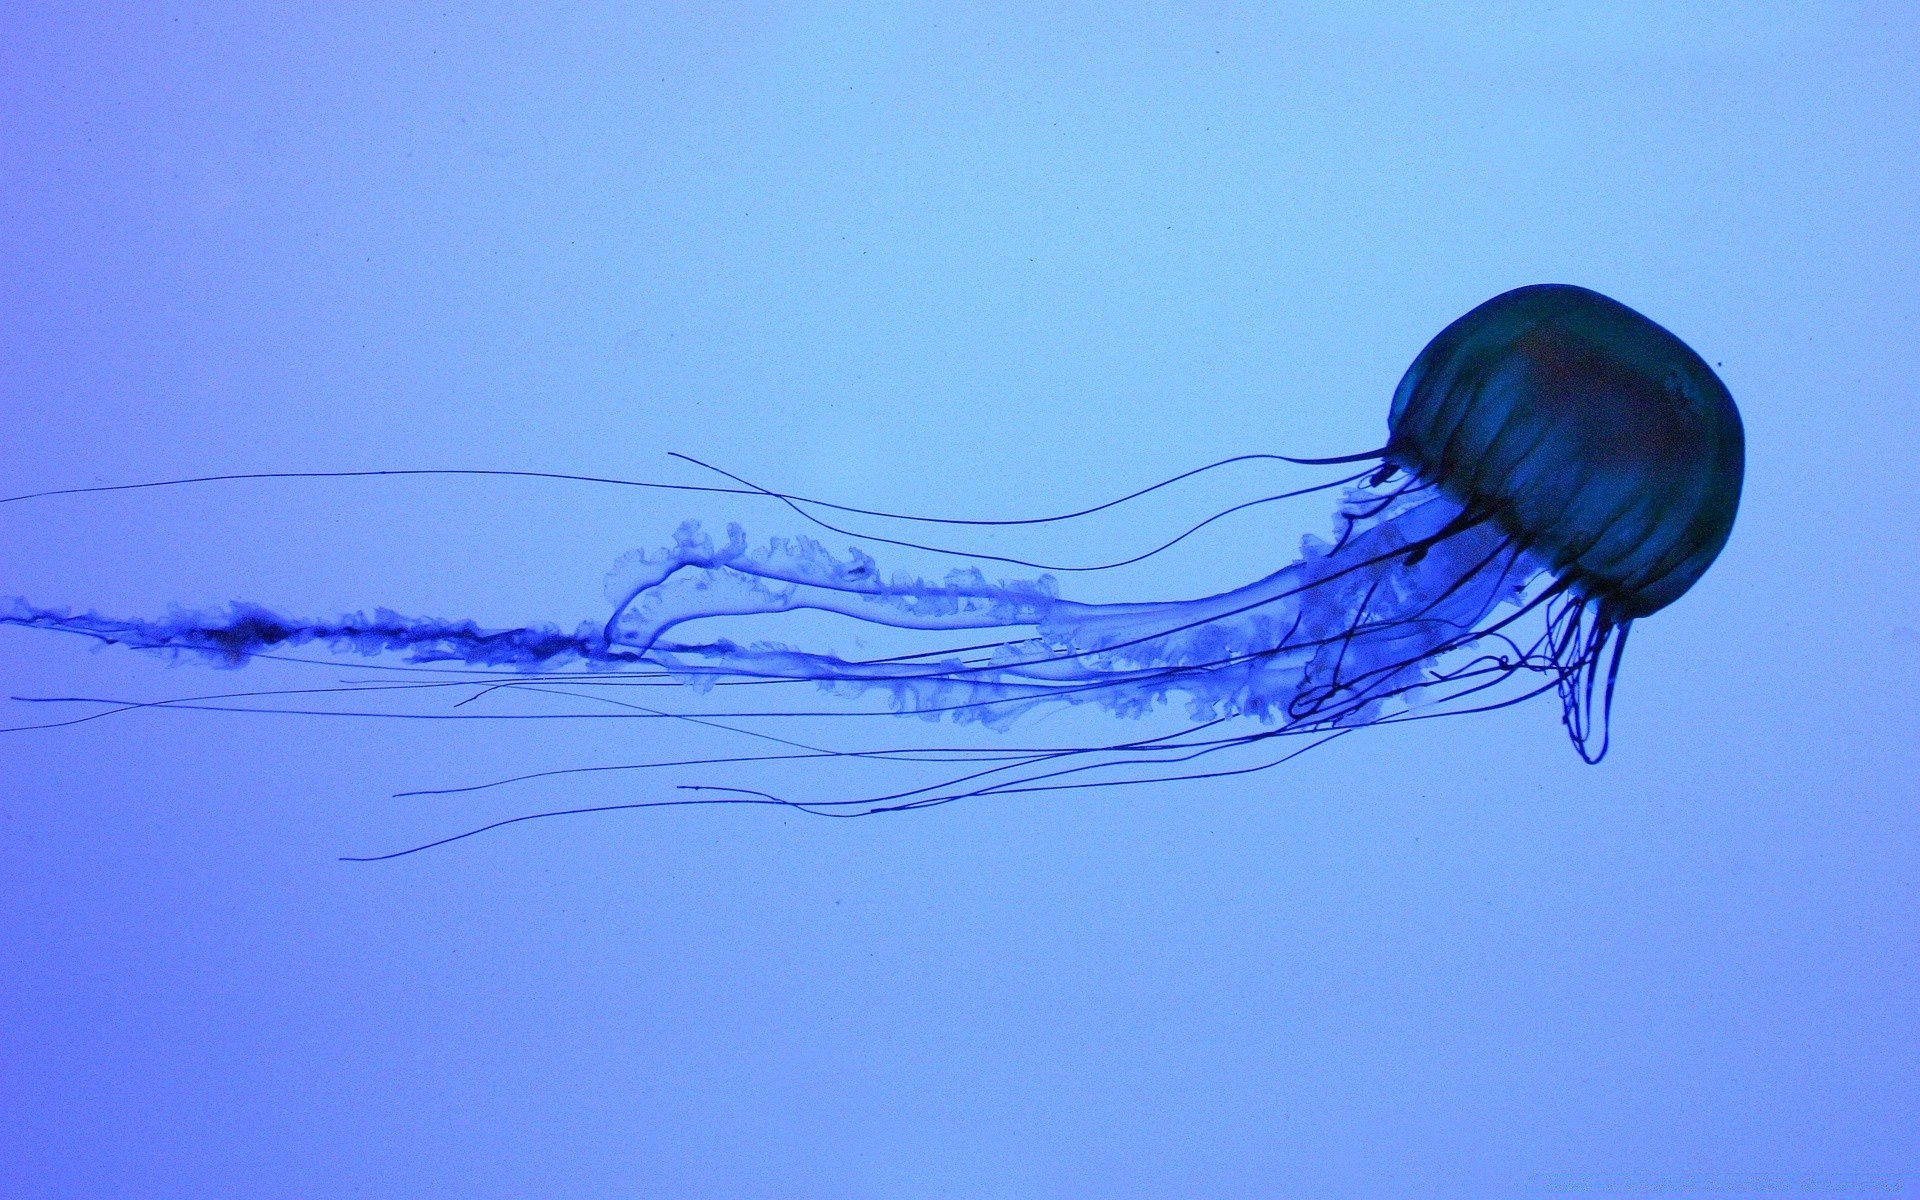 amphibians motion underwater water nature air danger jellyfish invertebrate